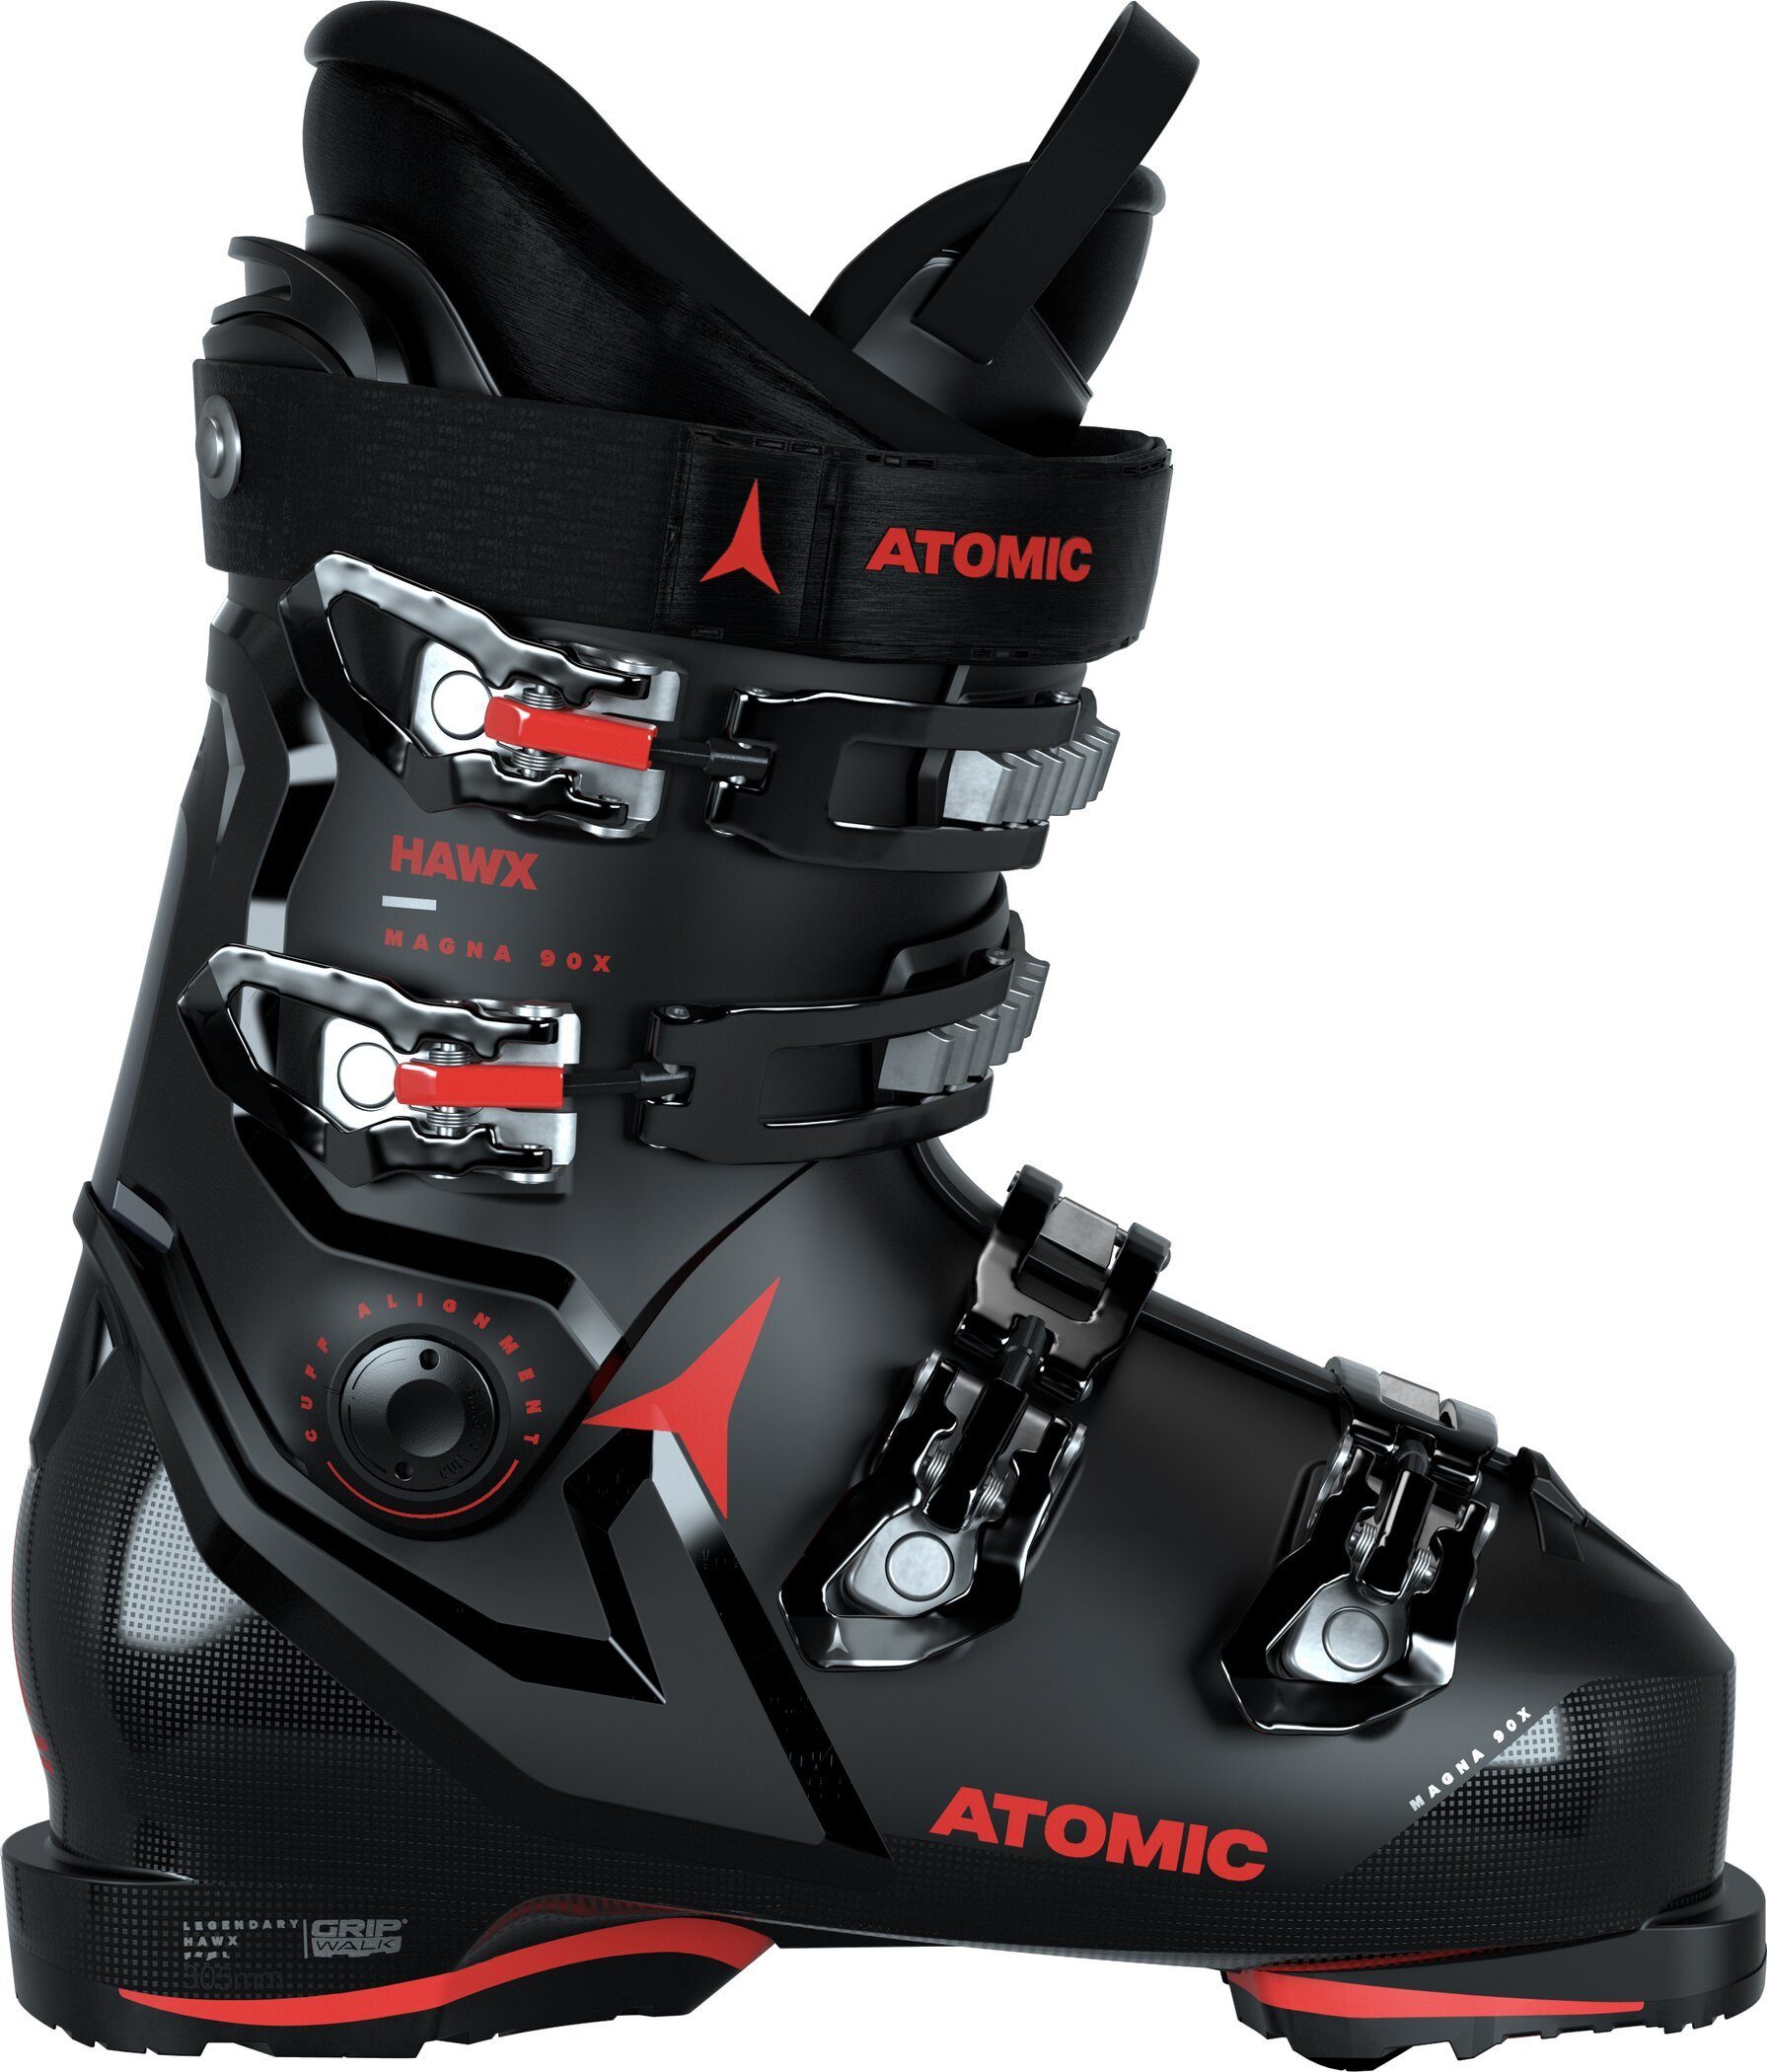 Atomic HAWX Skischuh 90X BLAC BLACK/ GW BLACK/RED/ MAGNA